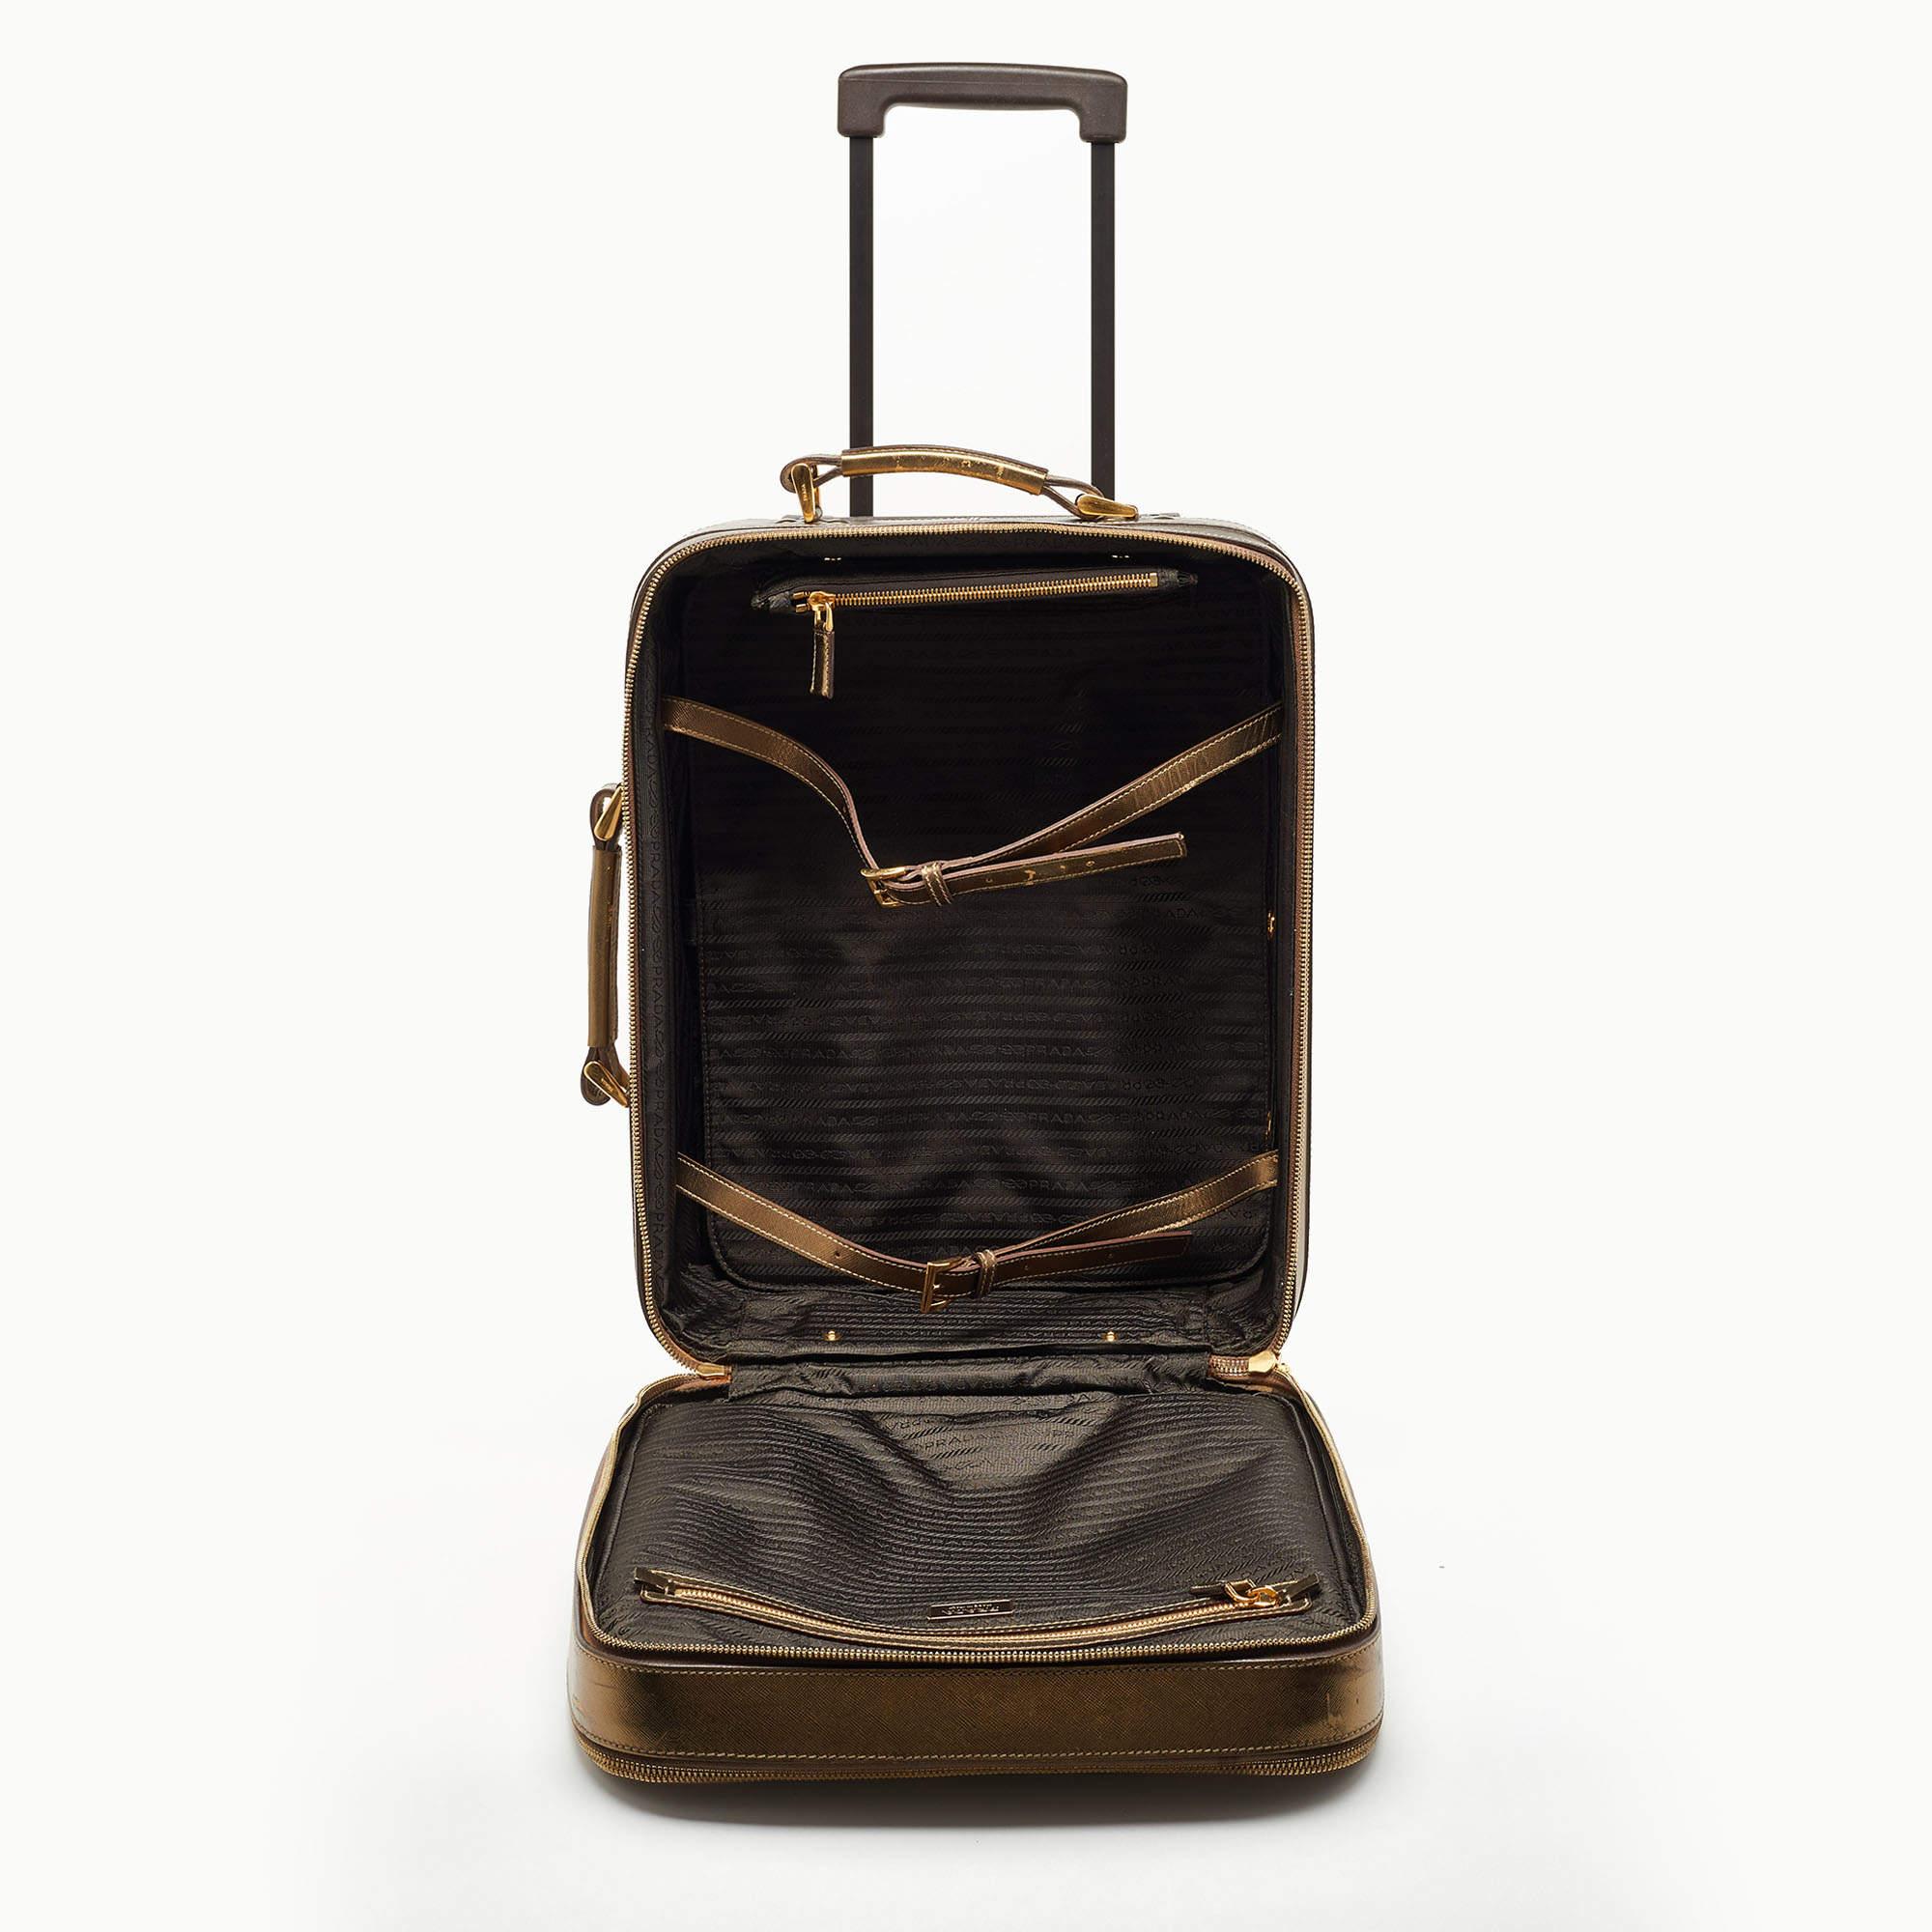 Prada Metallic Gold Saffiano Leather Travel Rolling Trolley Luggage For Sale 1